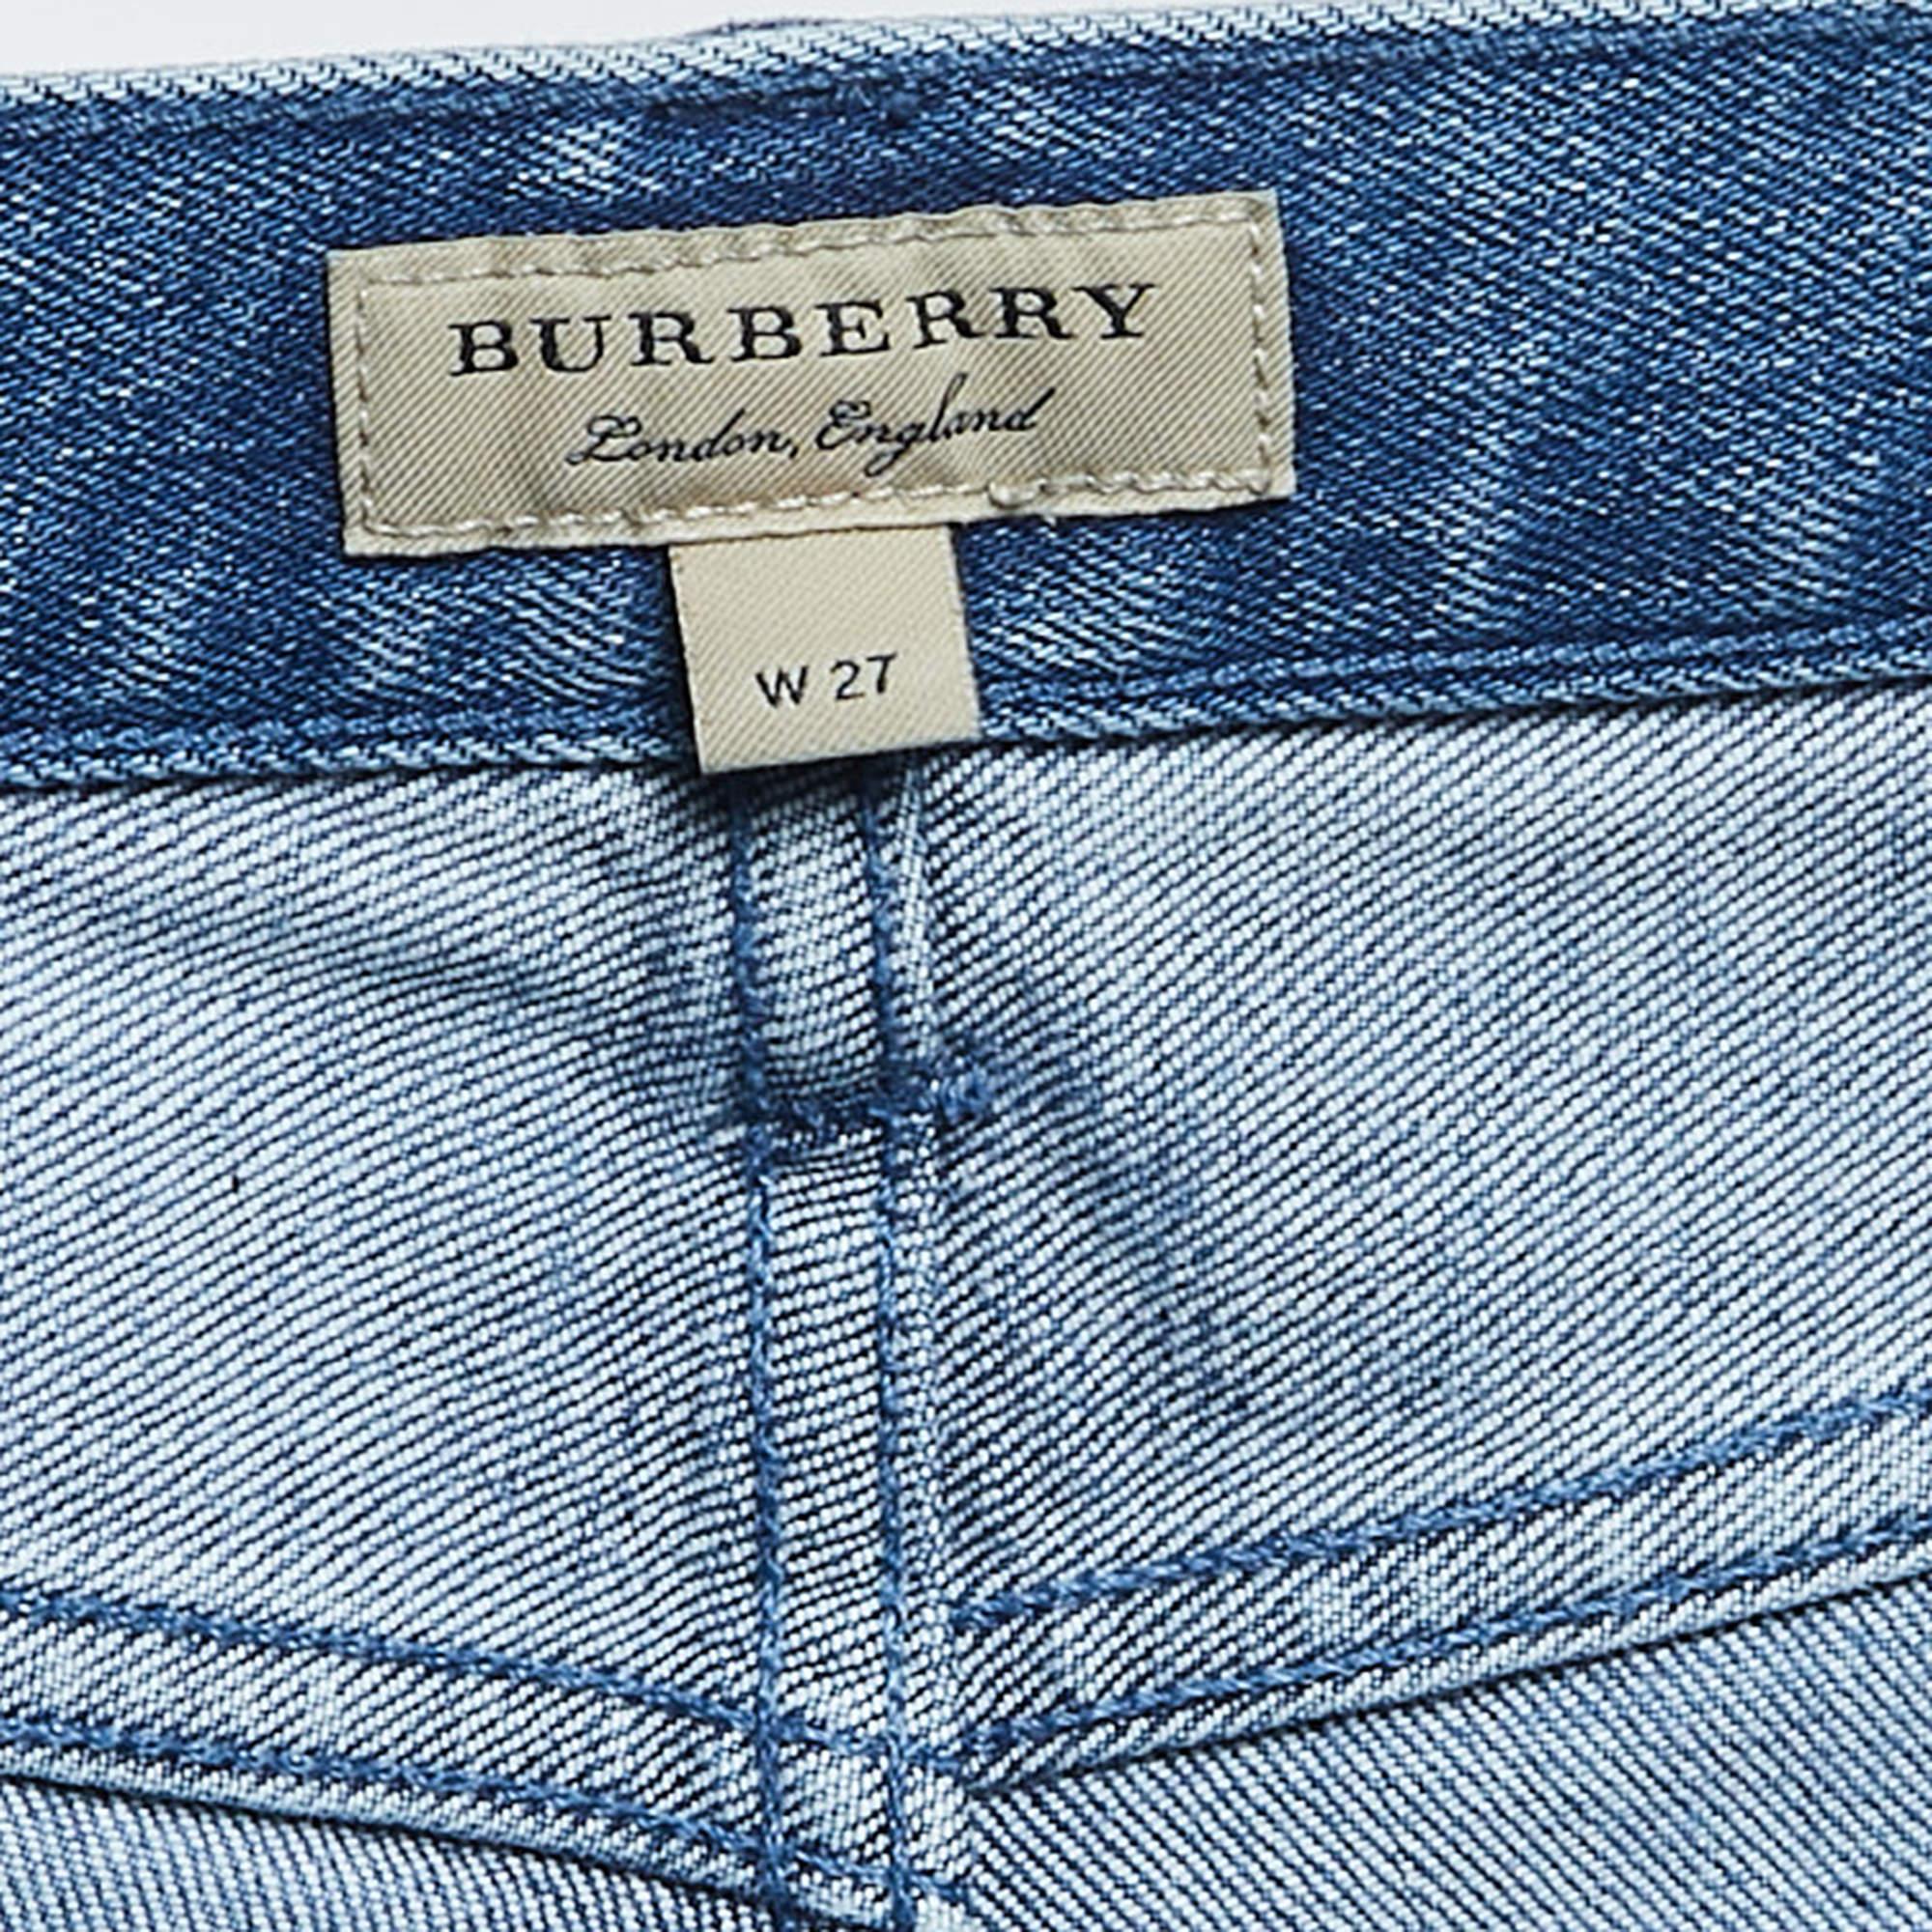 Men's Burberry Blue Washed Denim Slim Crop Jeans S Waist 27